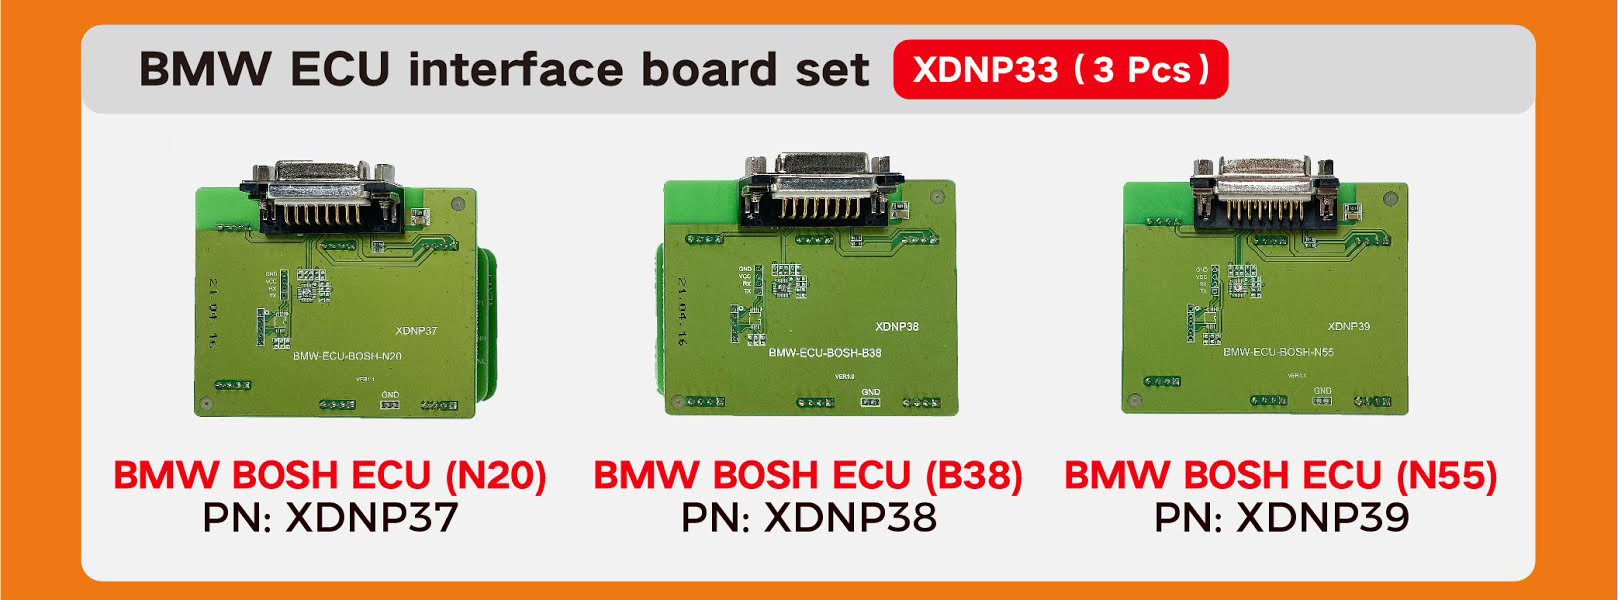 XDNP33 Adapter for BMW N20 B38 N55 ECU Interface